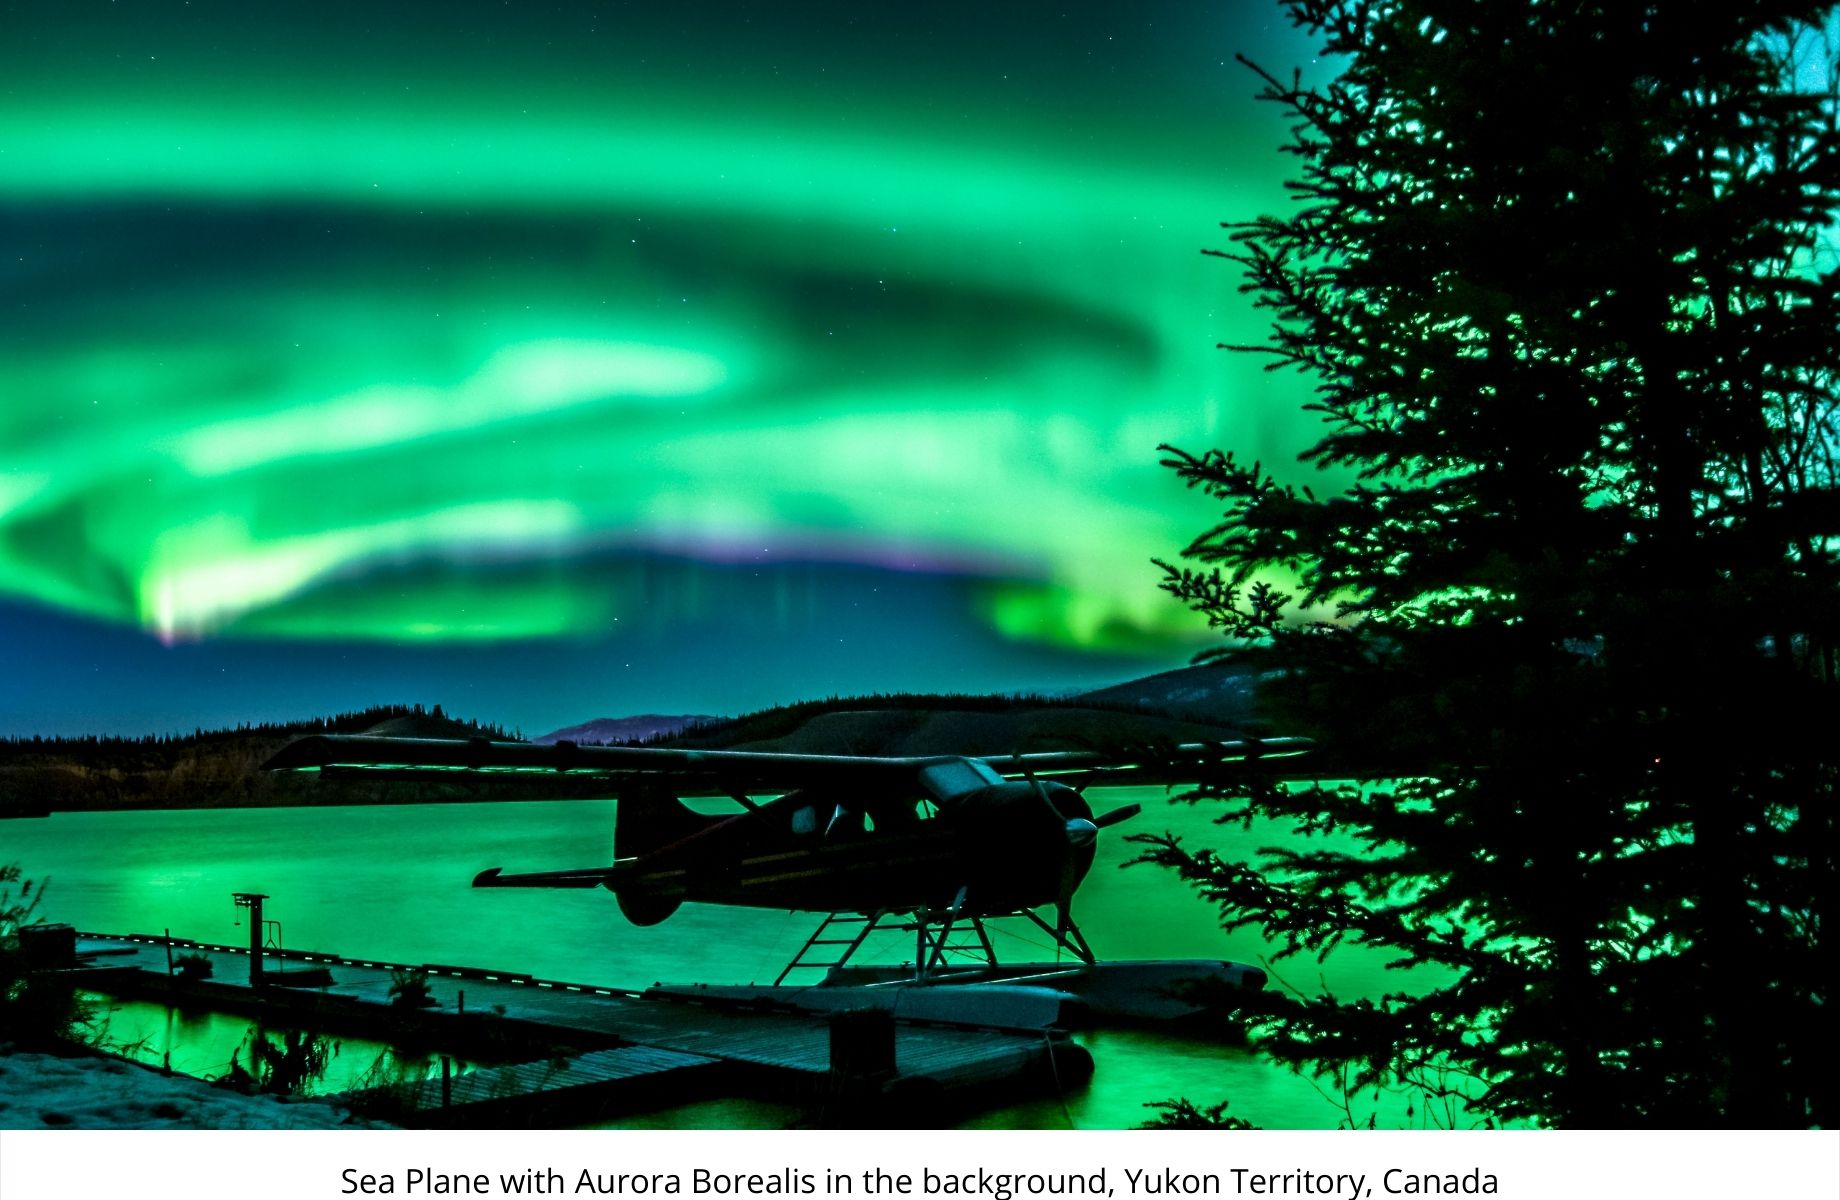 Sea Plane with Aurora Borealis in the background, Yukon Territory, Canada